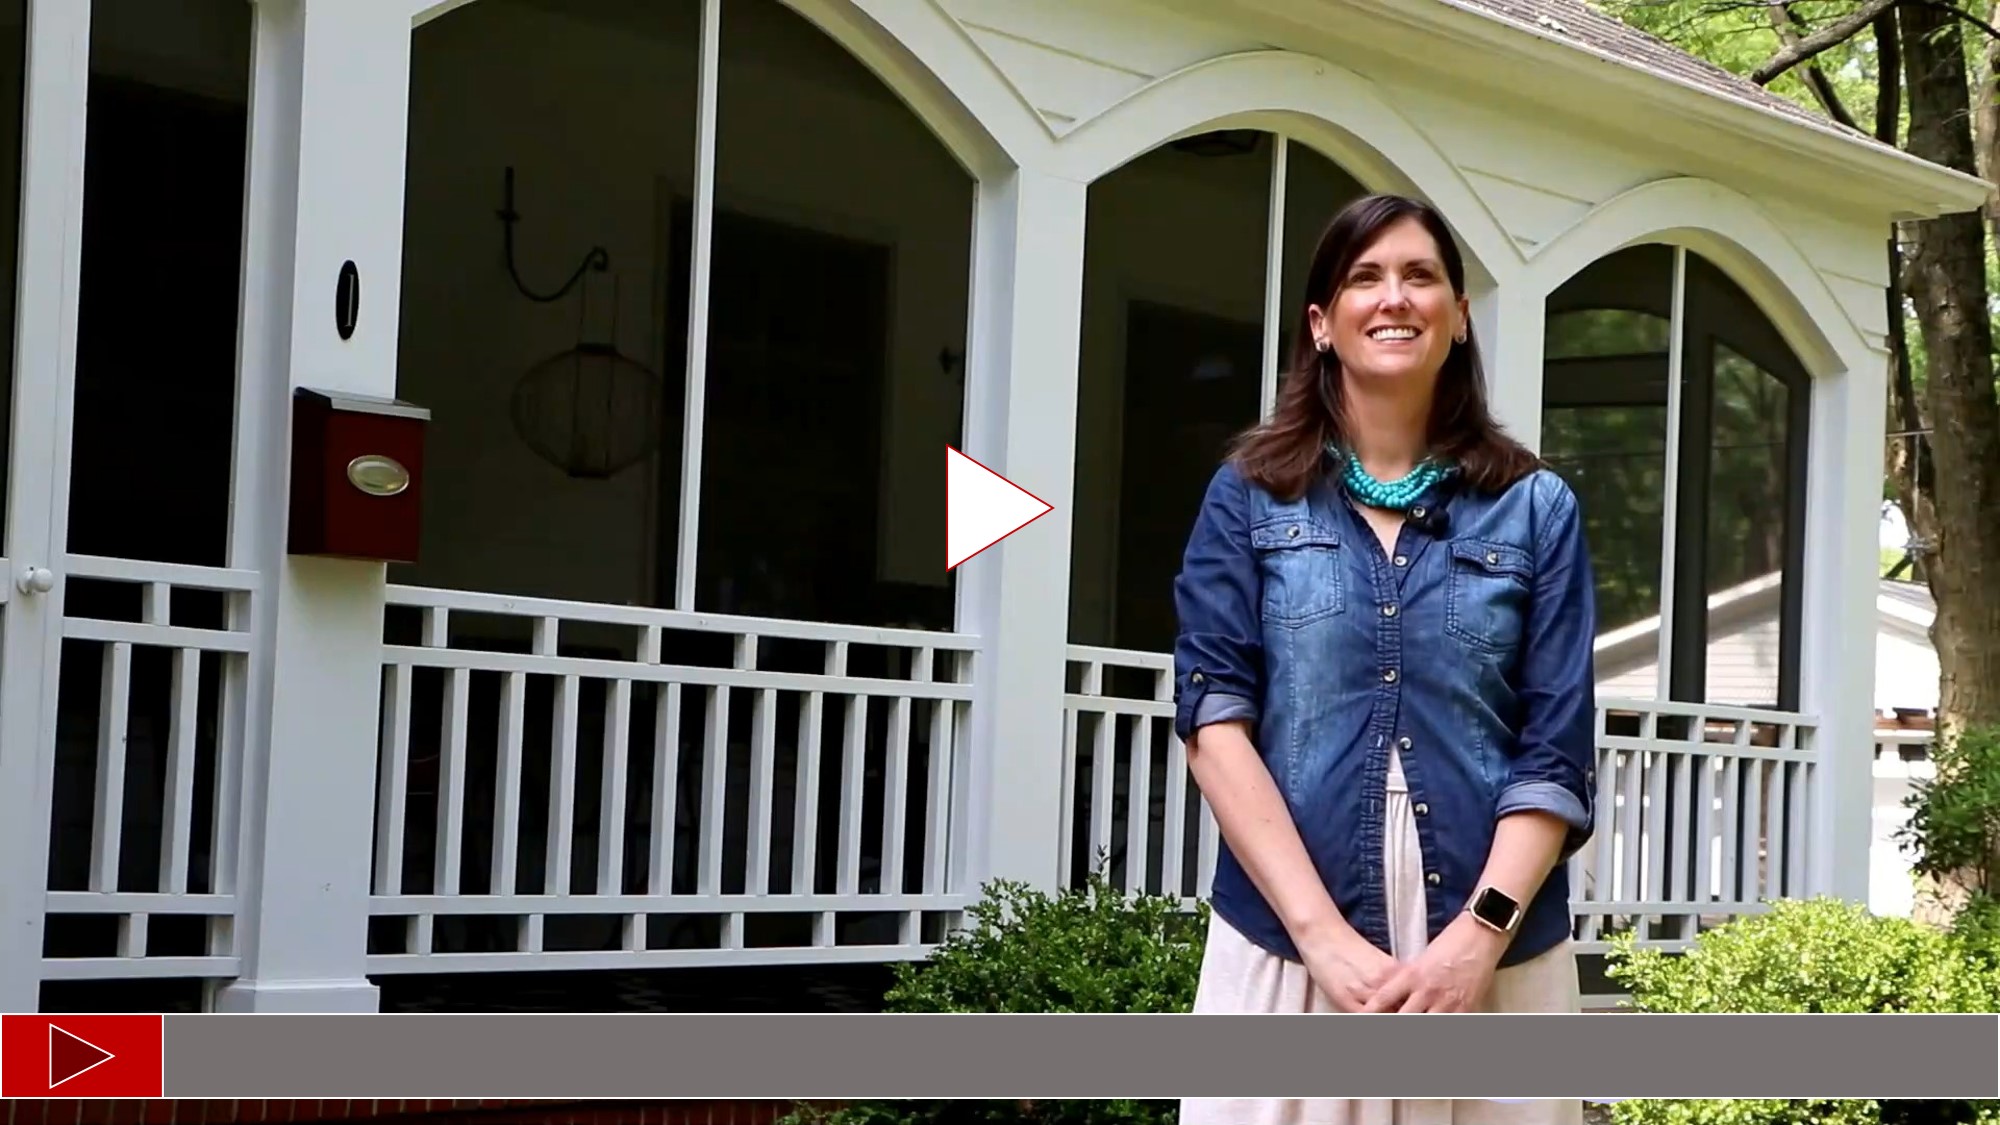 Manville Heights Neighborhood Melissa Interview Video | Liz Erb Firmstone, Realtor